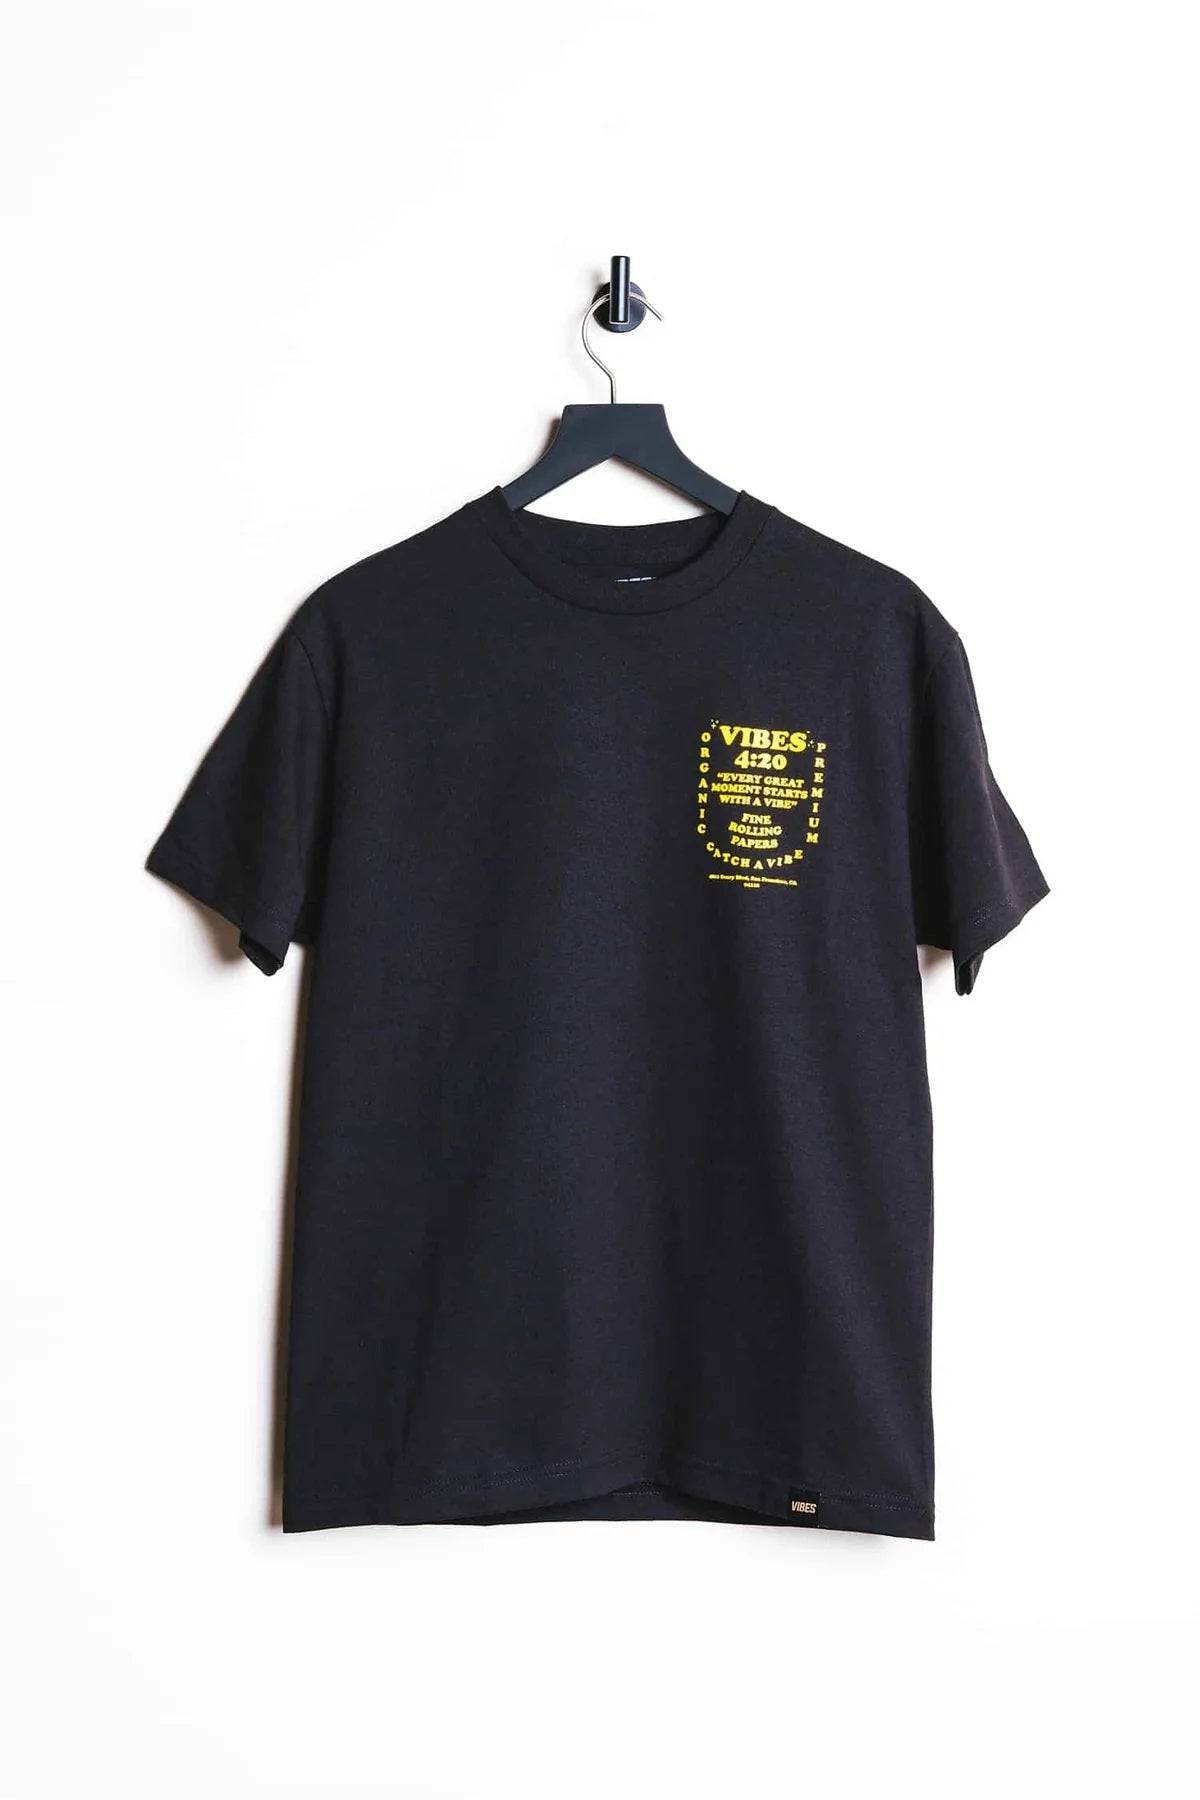 VIBES Black Starts With Vibe T-Shirt 2X-Large